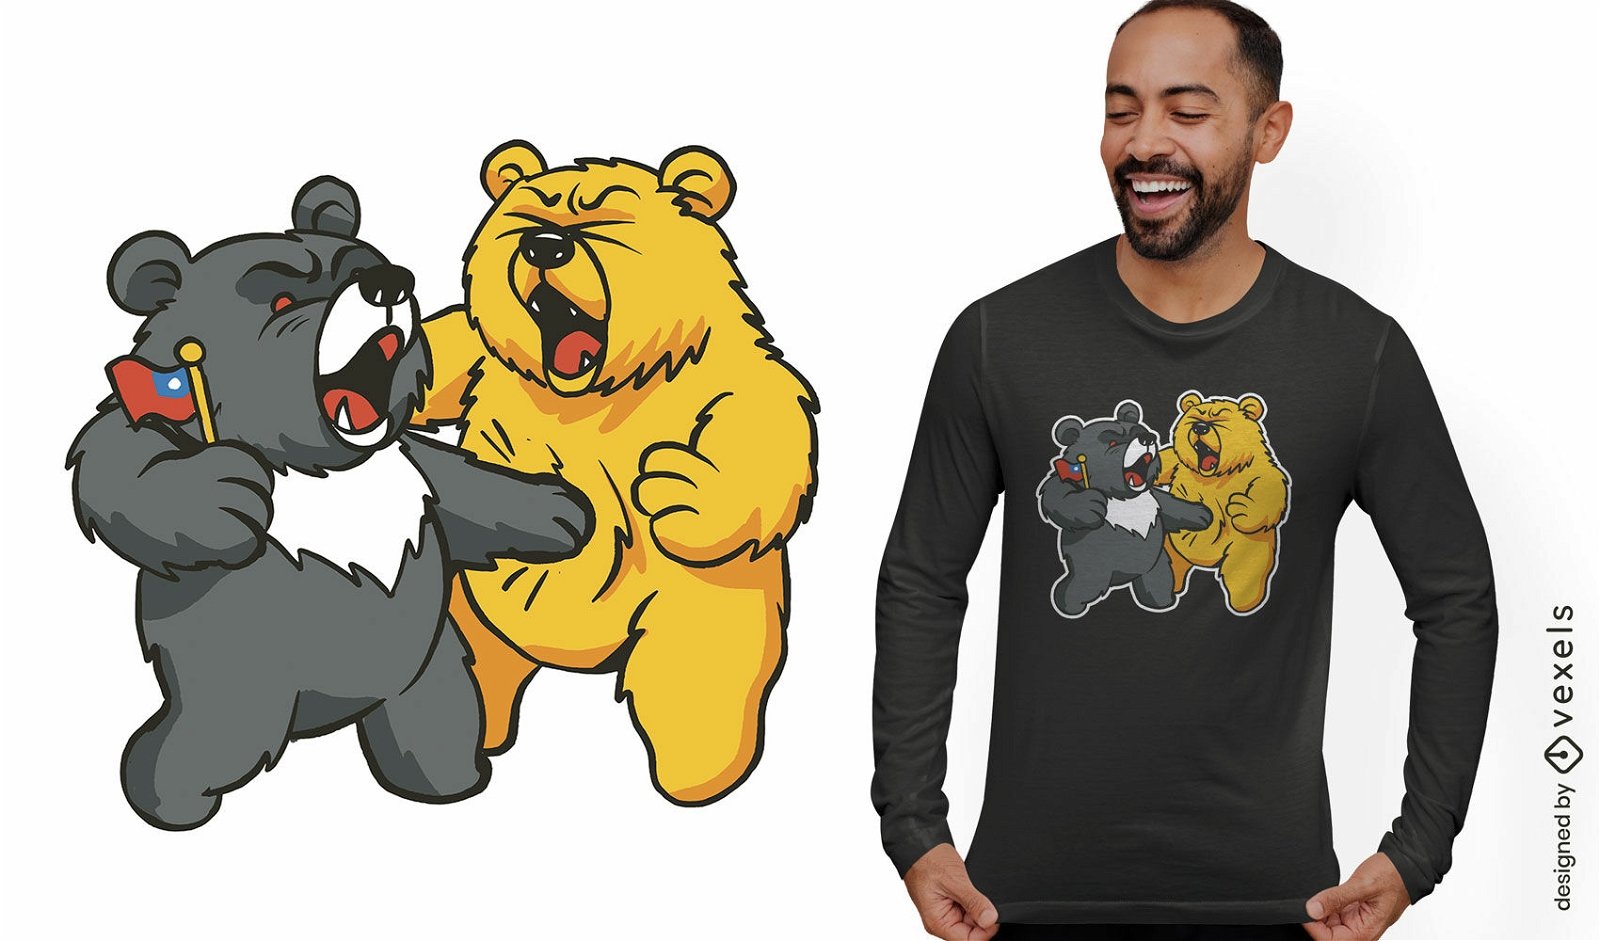 Bear humor t-shirt design